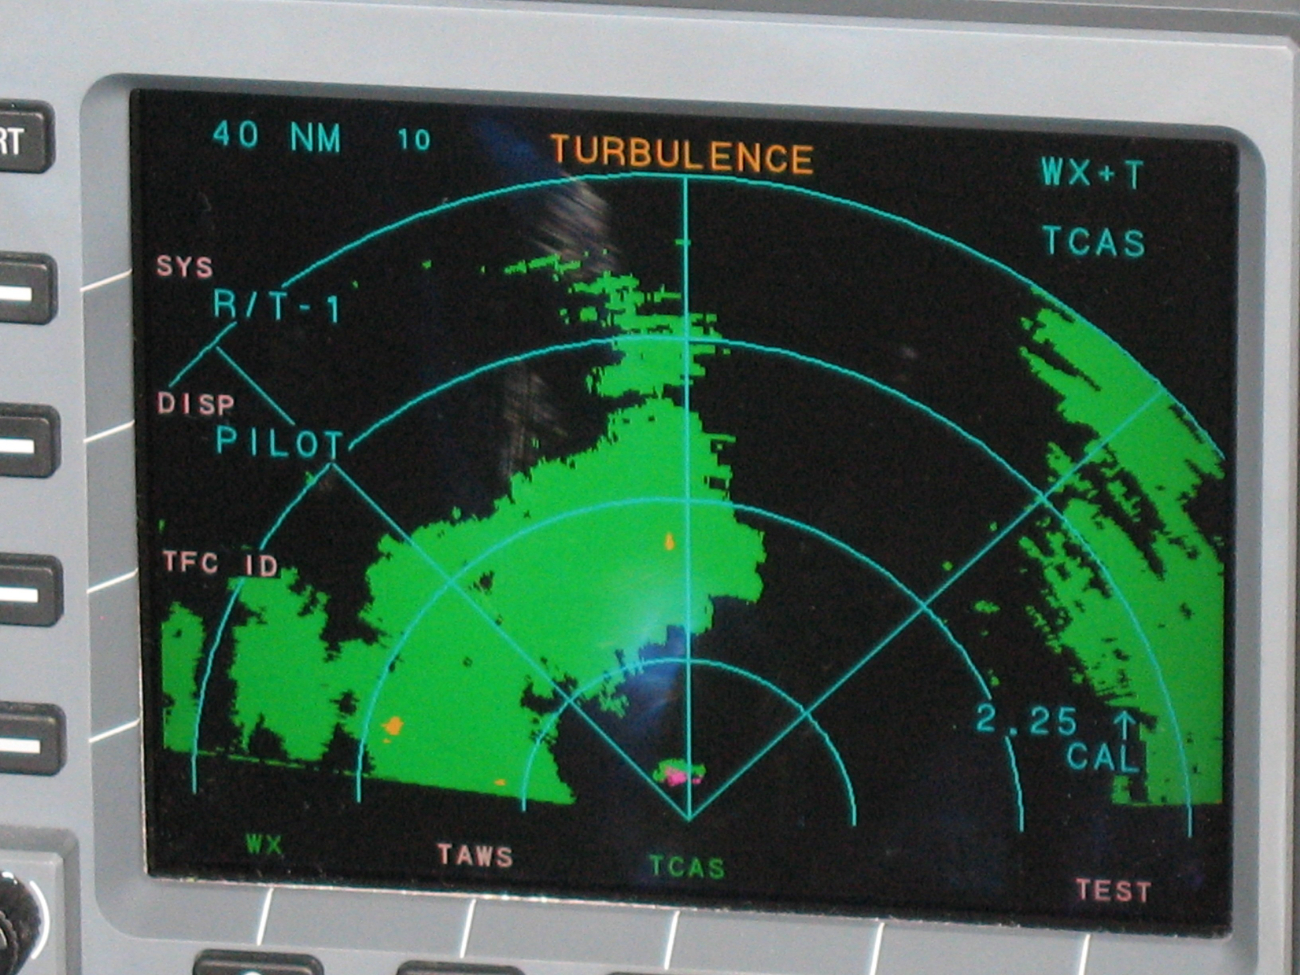 Turbulence warning as NOAA P-3 flies into heavy weather